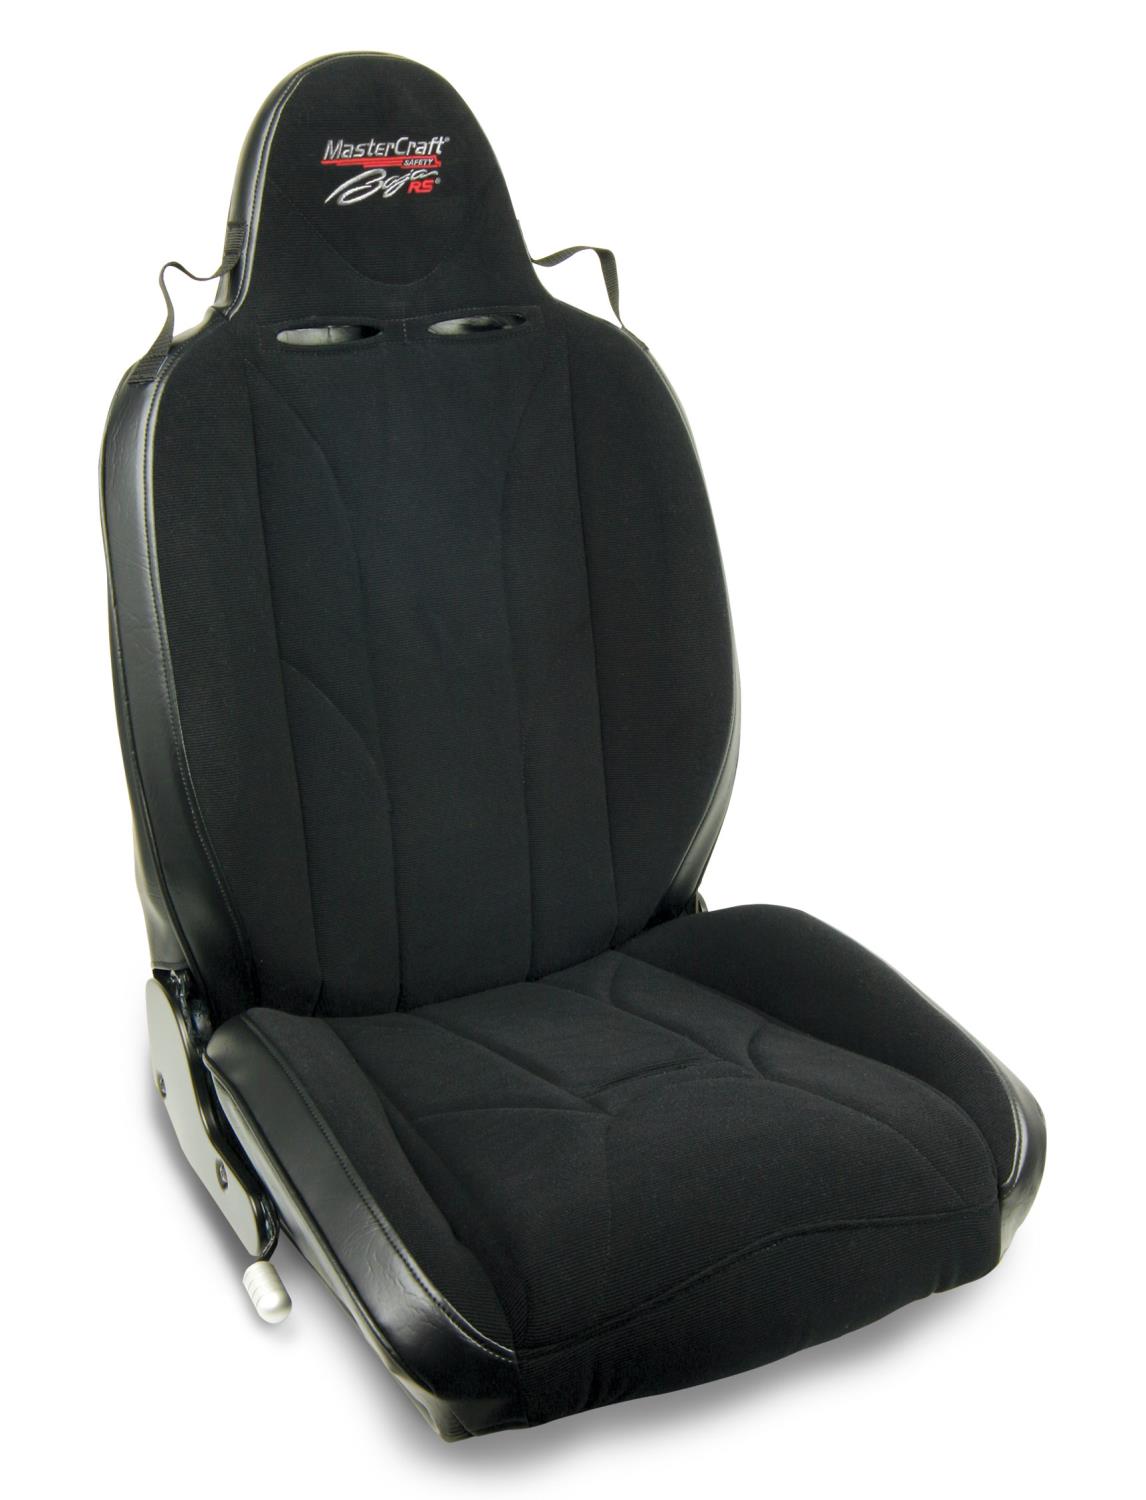 506024 MasterCraft Baja RS w/Fixed Headrest, Black w/Black Center & Black Side Panels, Recliner Lever Right, w/BRS Stitch